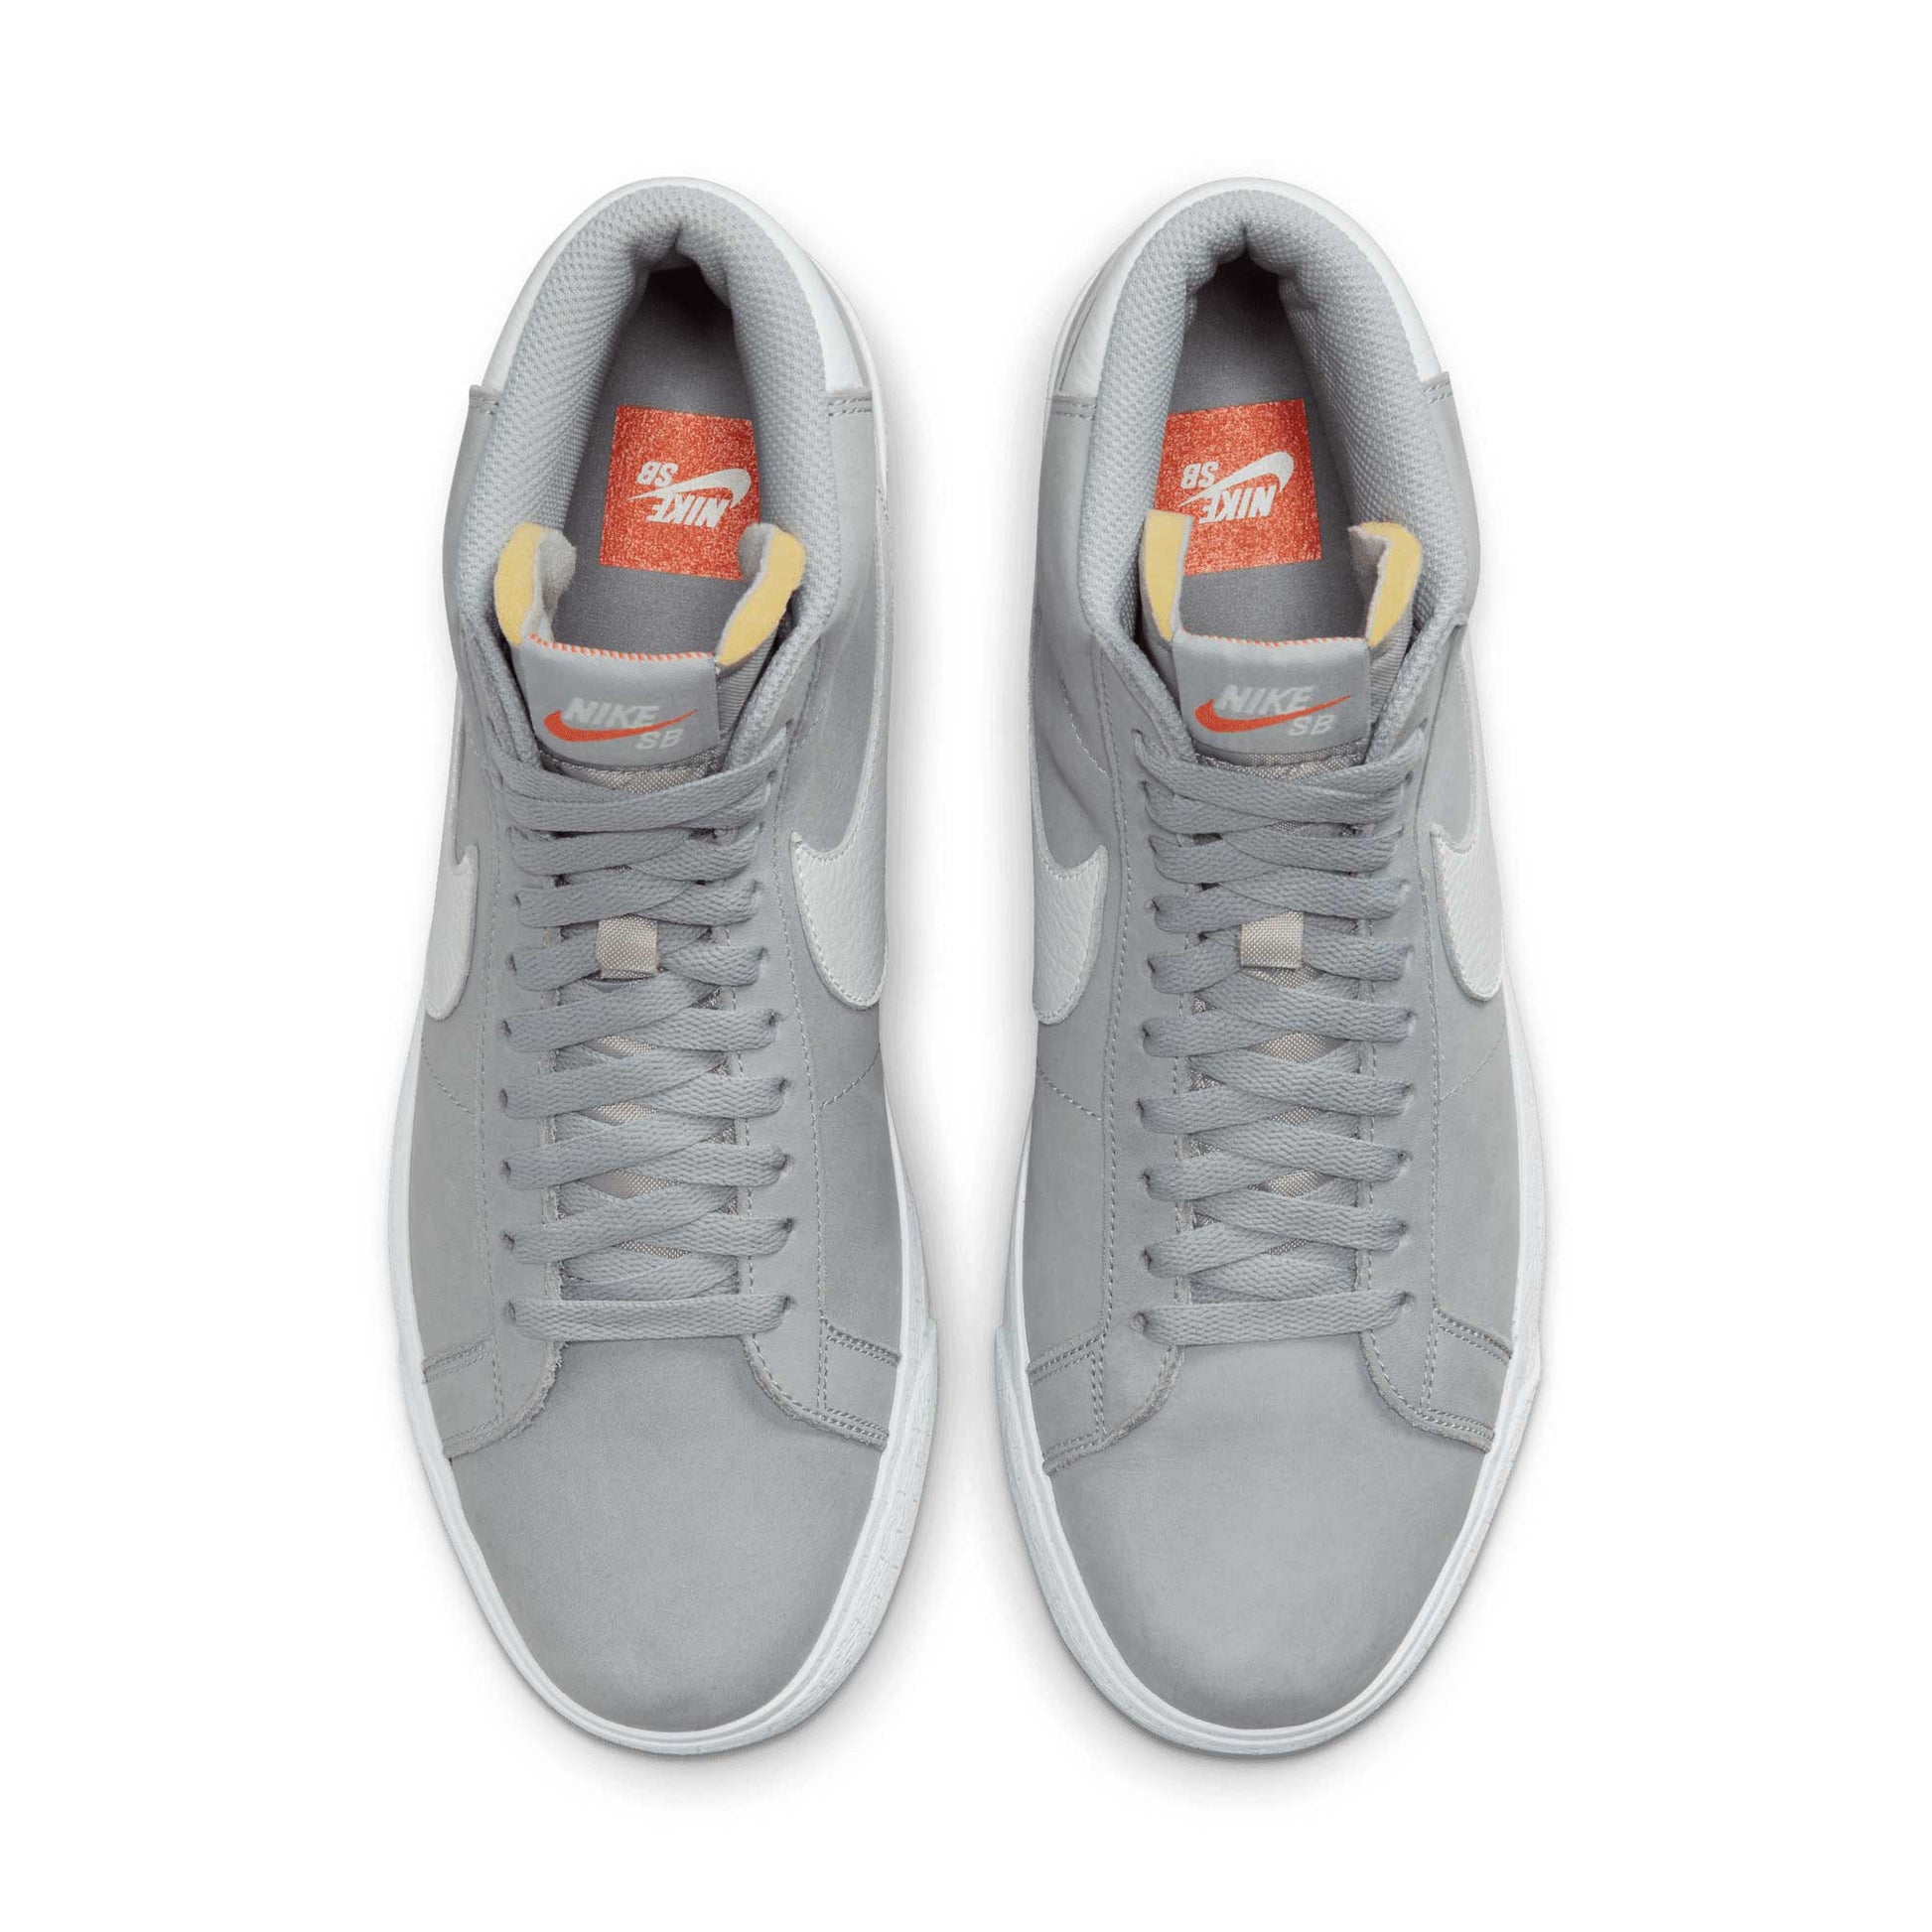 Nike SB Zoom Blazer Mid ISO, wolf grey/white-wolf grey - Tiki Room Skateboards - 3